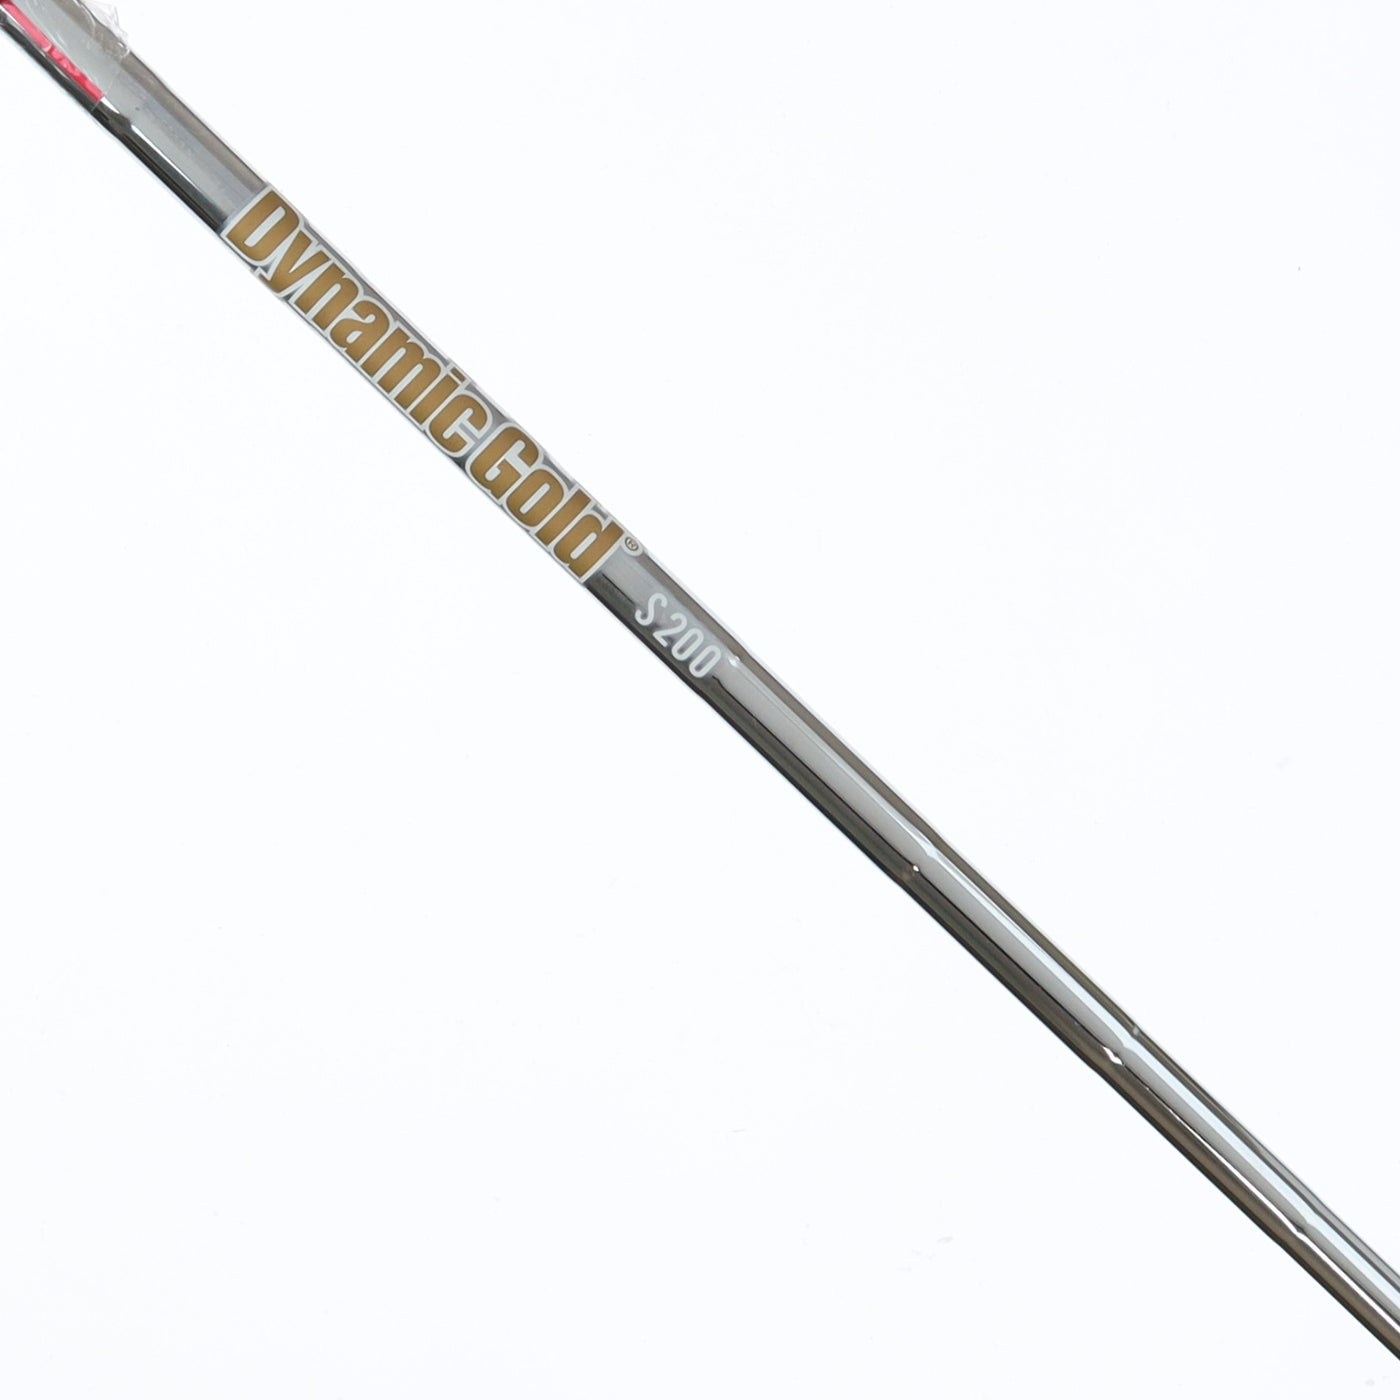 Golf partner Wedge Brand New NEXGEN FORGED (2022) 48° Dynamic Gold S200